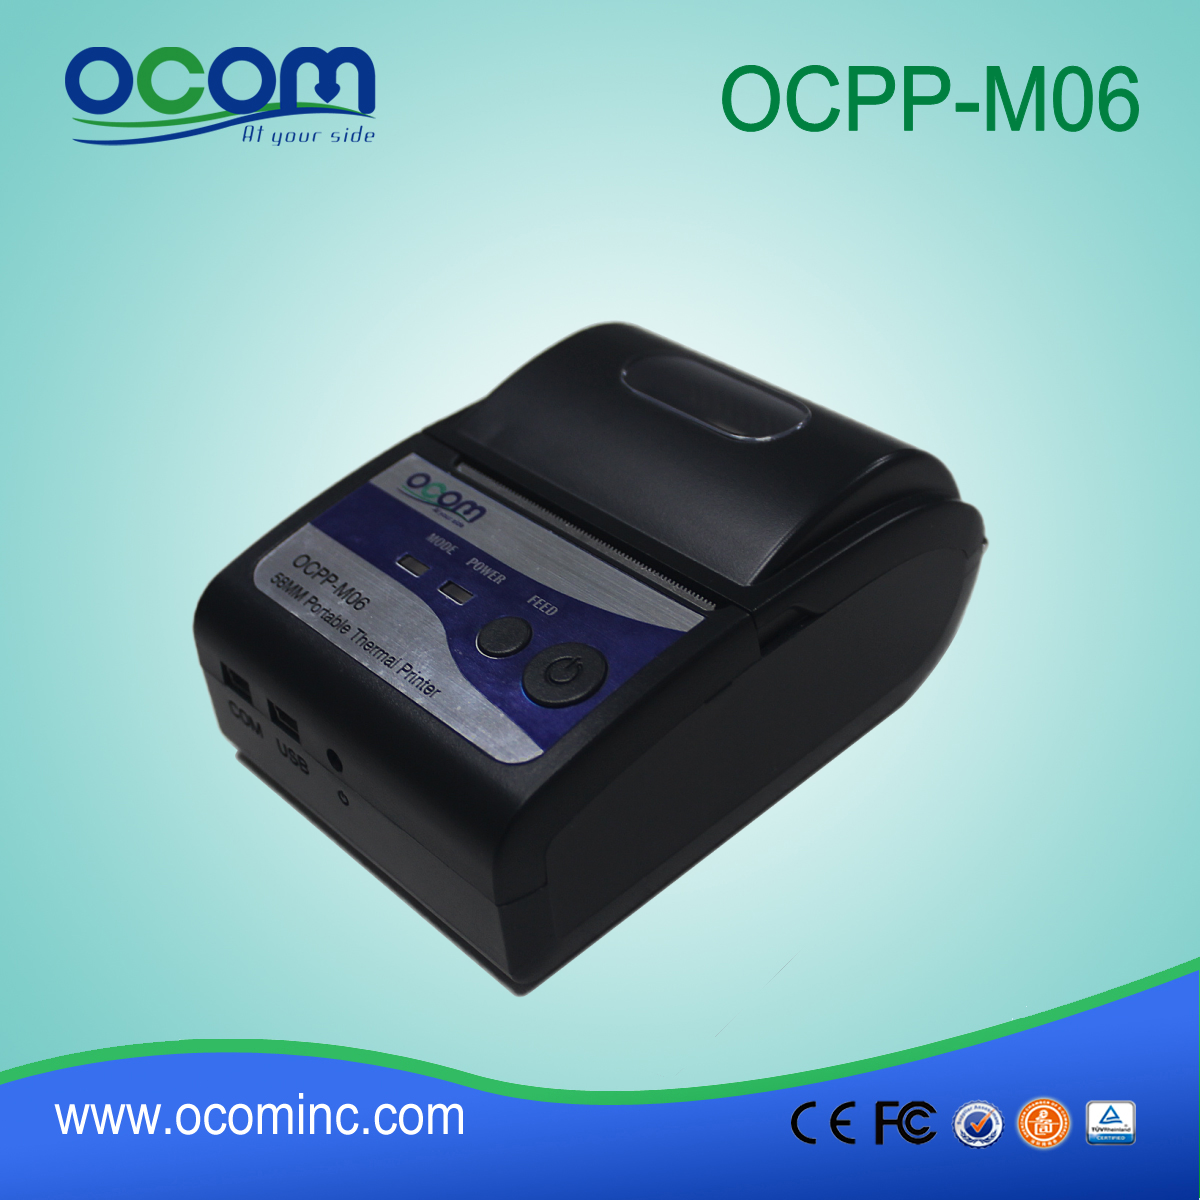 (OCPP-M06) Cina fabbrica OCOM 58 millimetri mini stampatore mini bluetooth termico